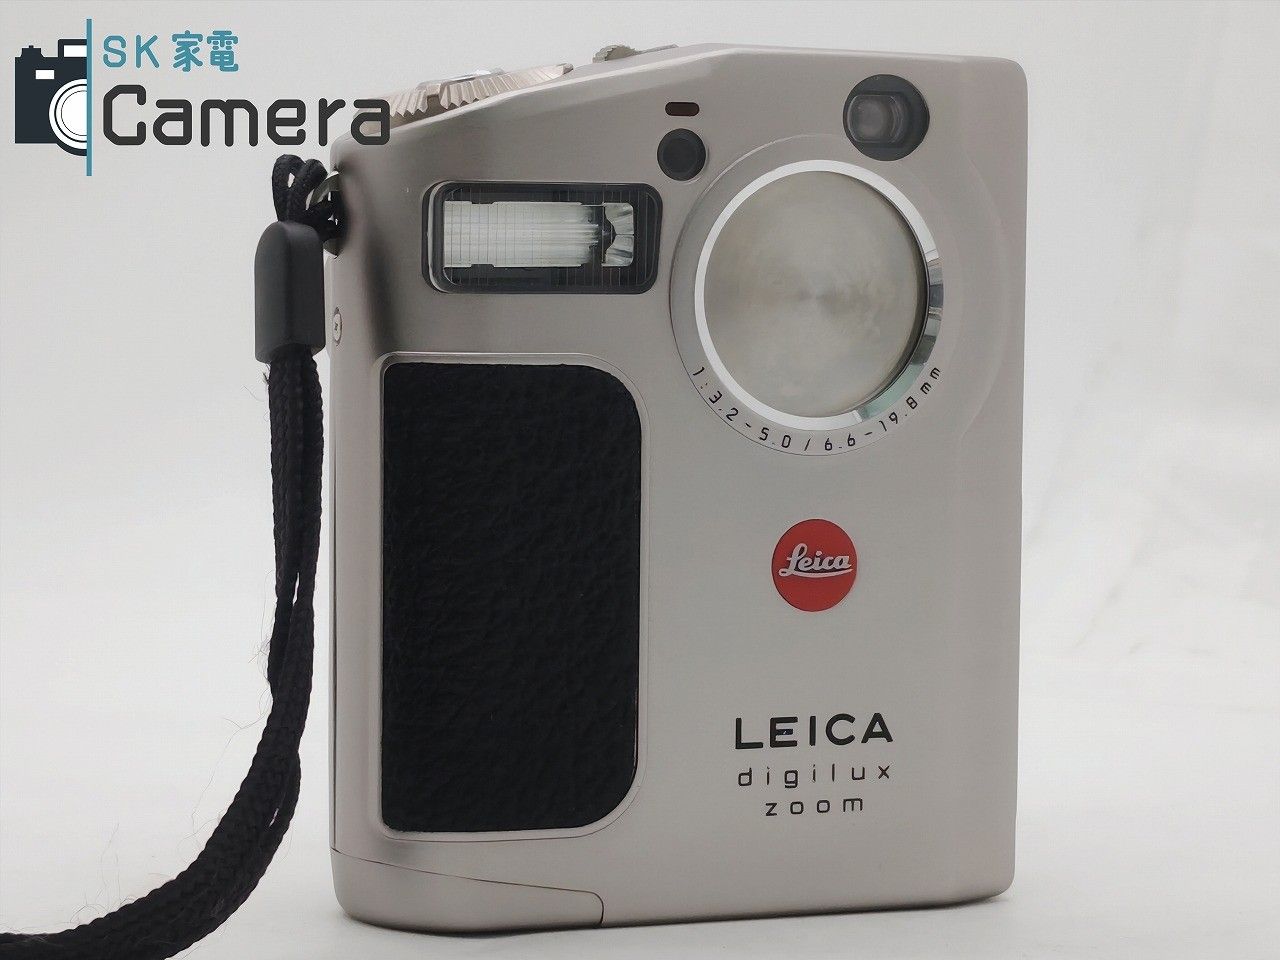 LEICA digilux zoom ライカ コンパクトデジタルカメラ 本体のみ ジャンク - メルカリ